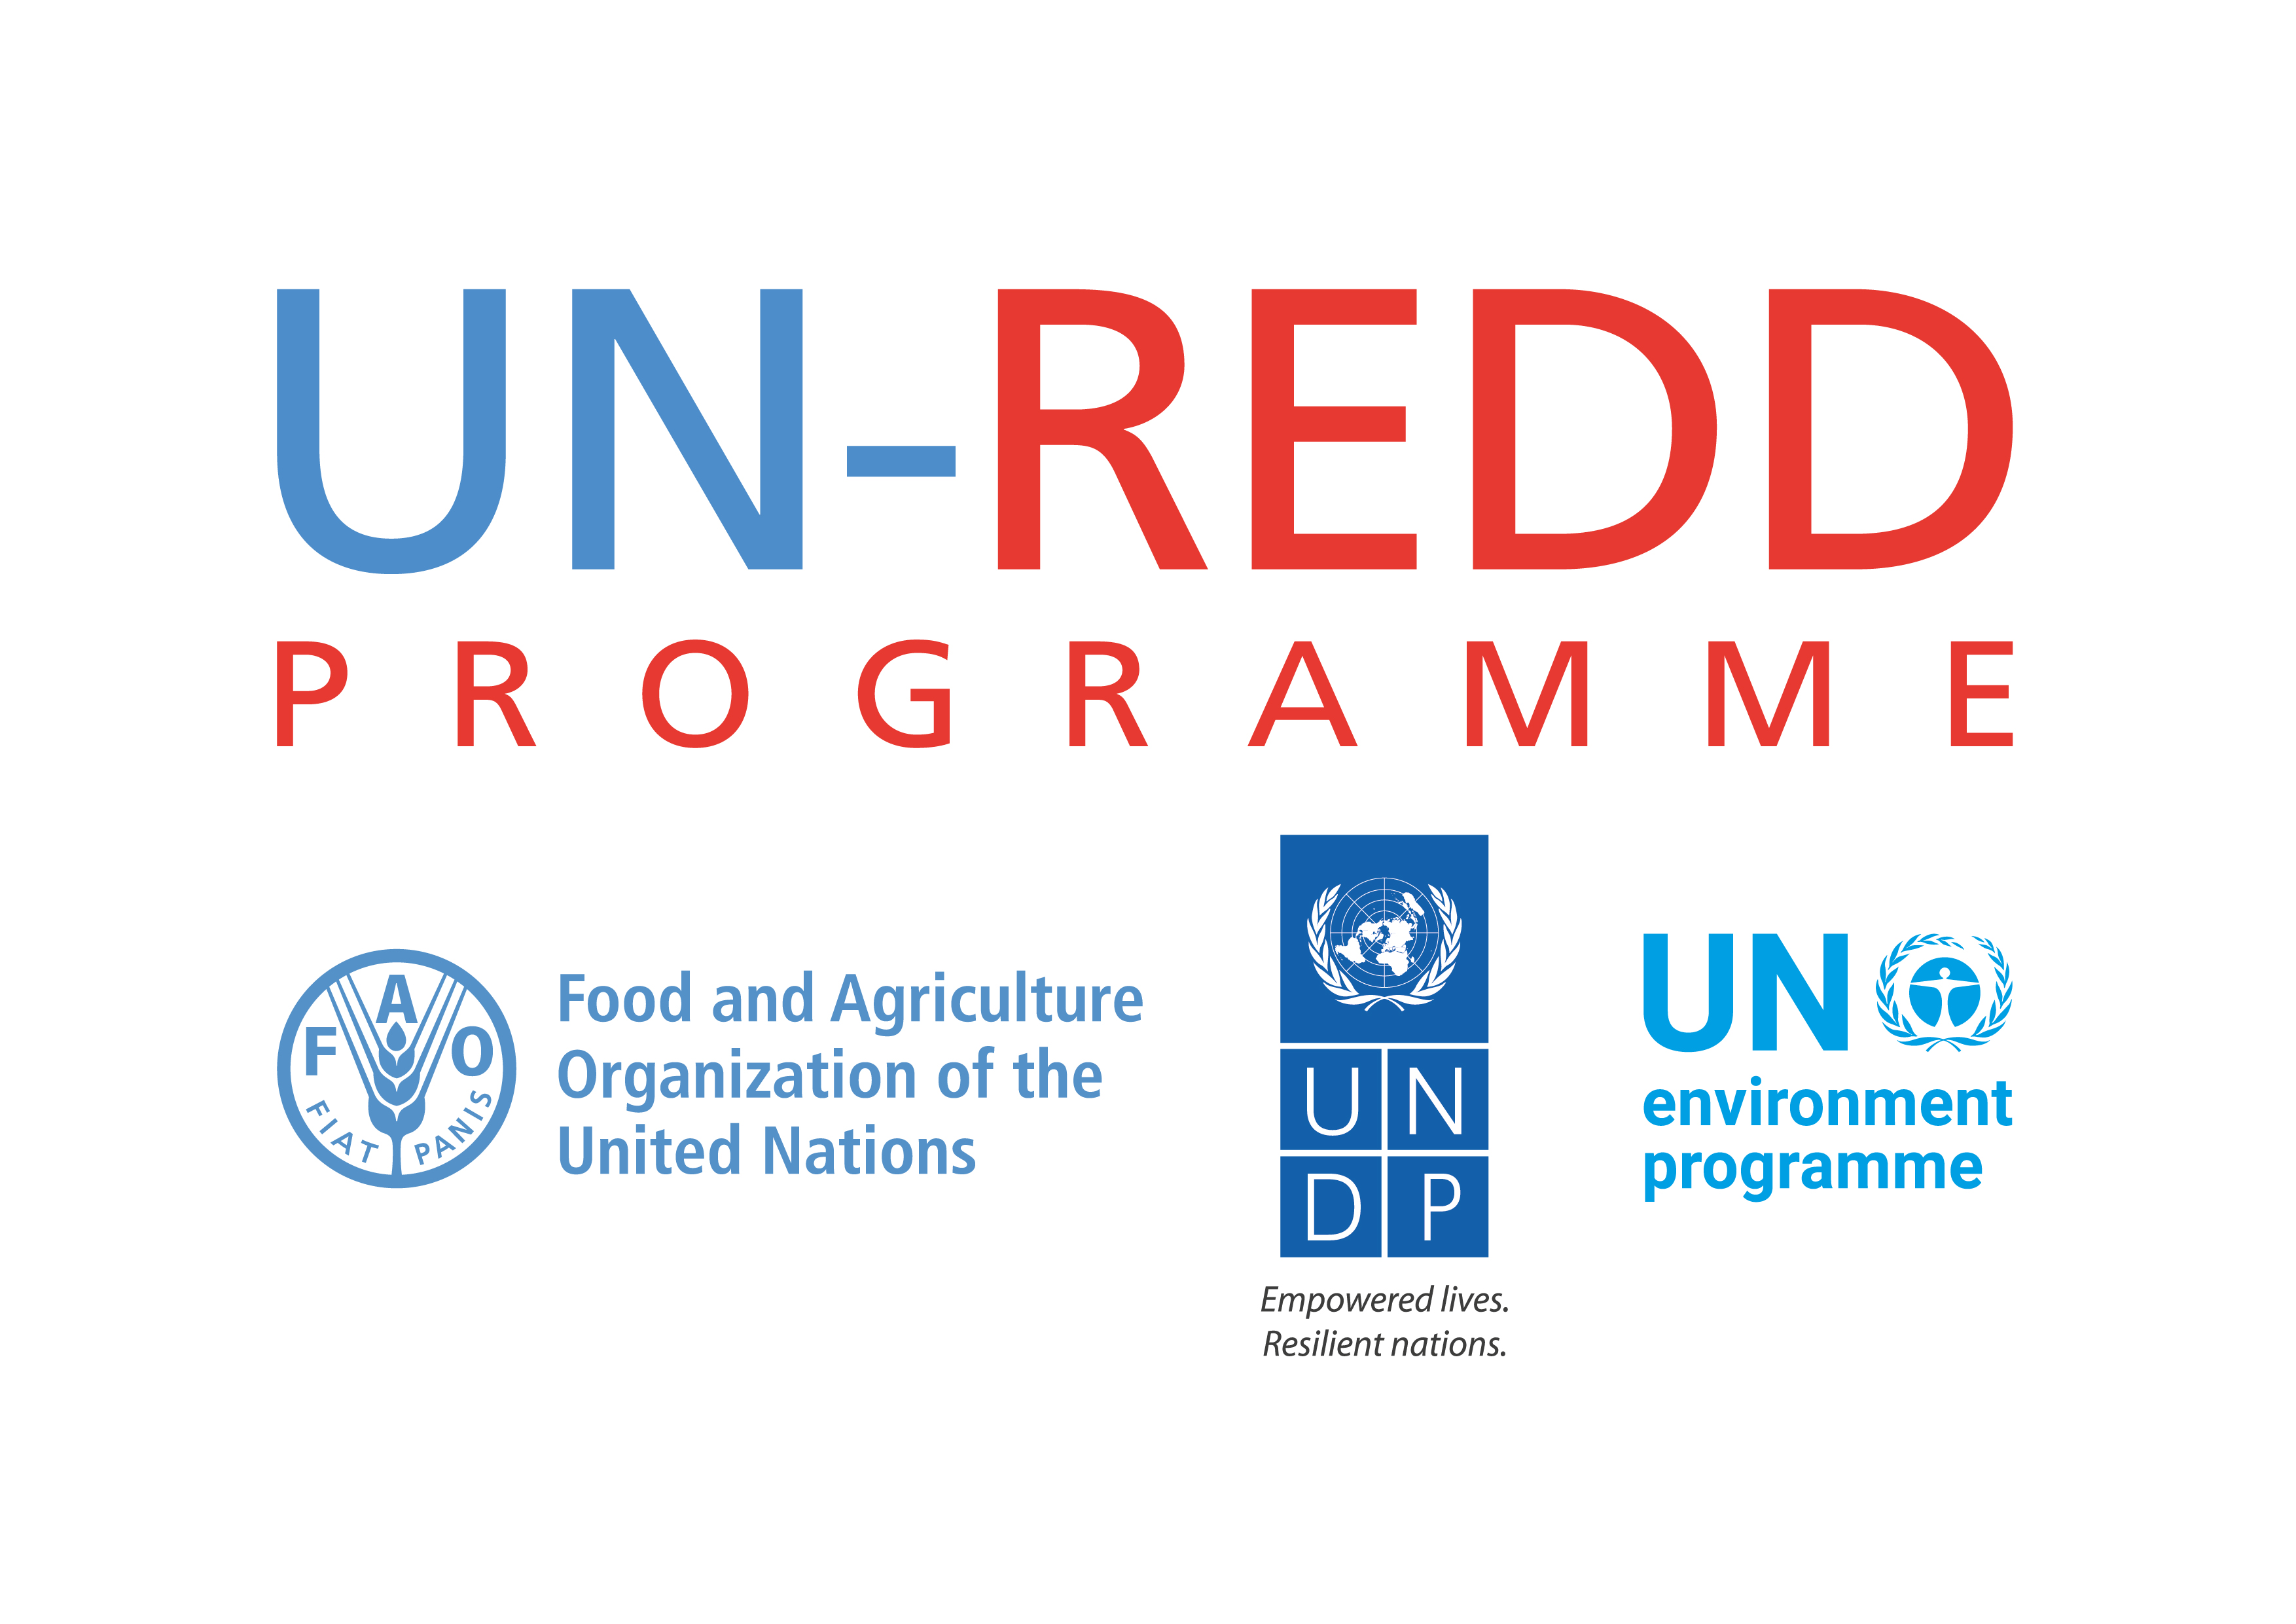 UN-REDD Programme